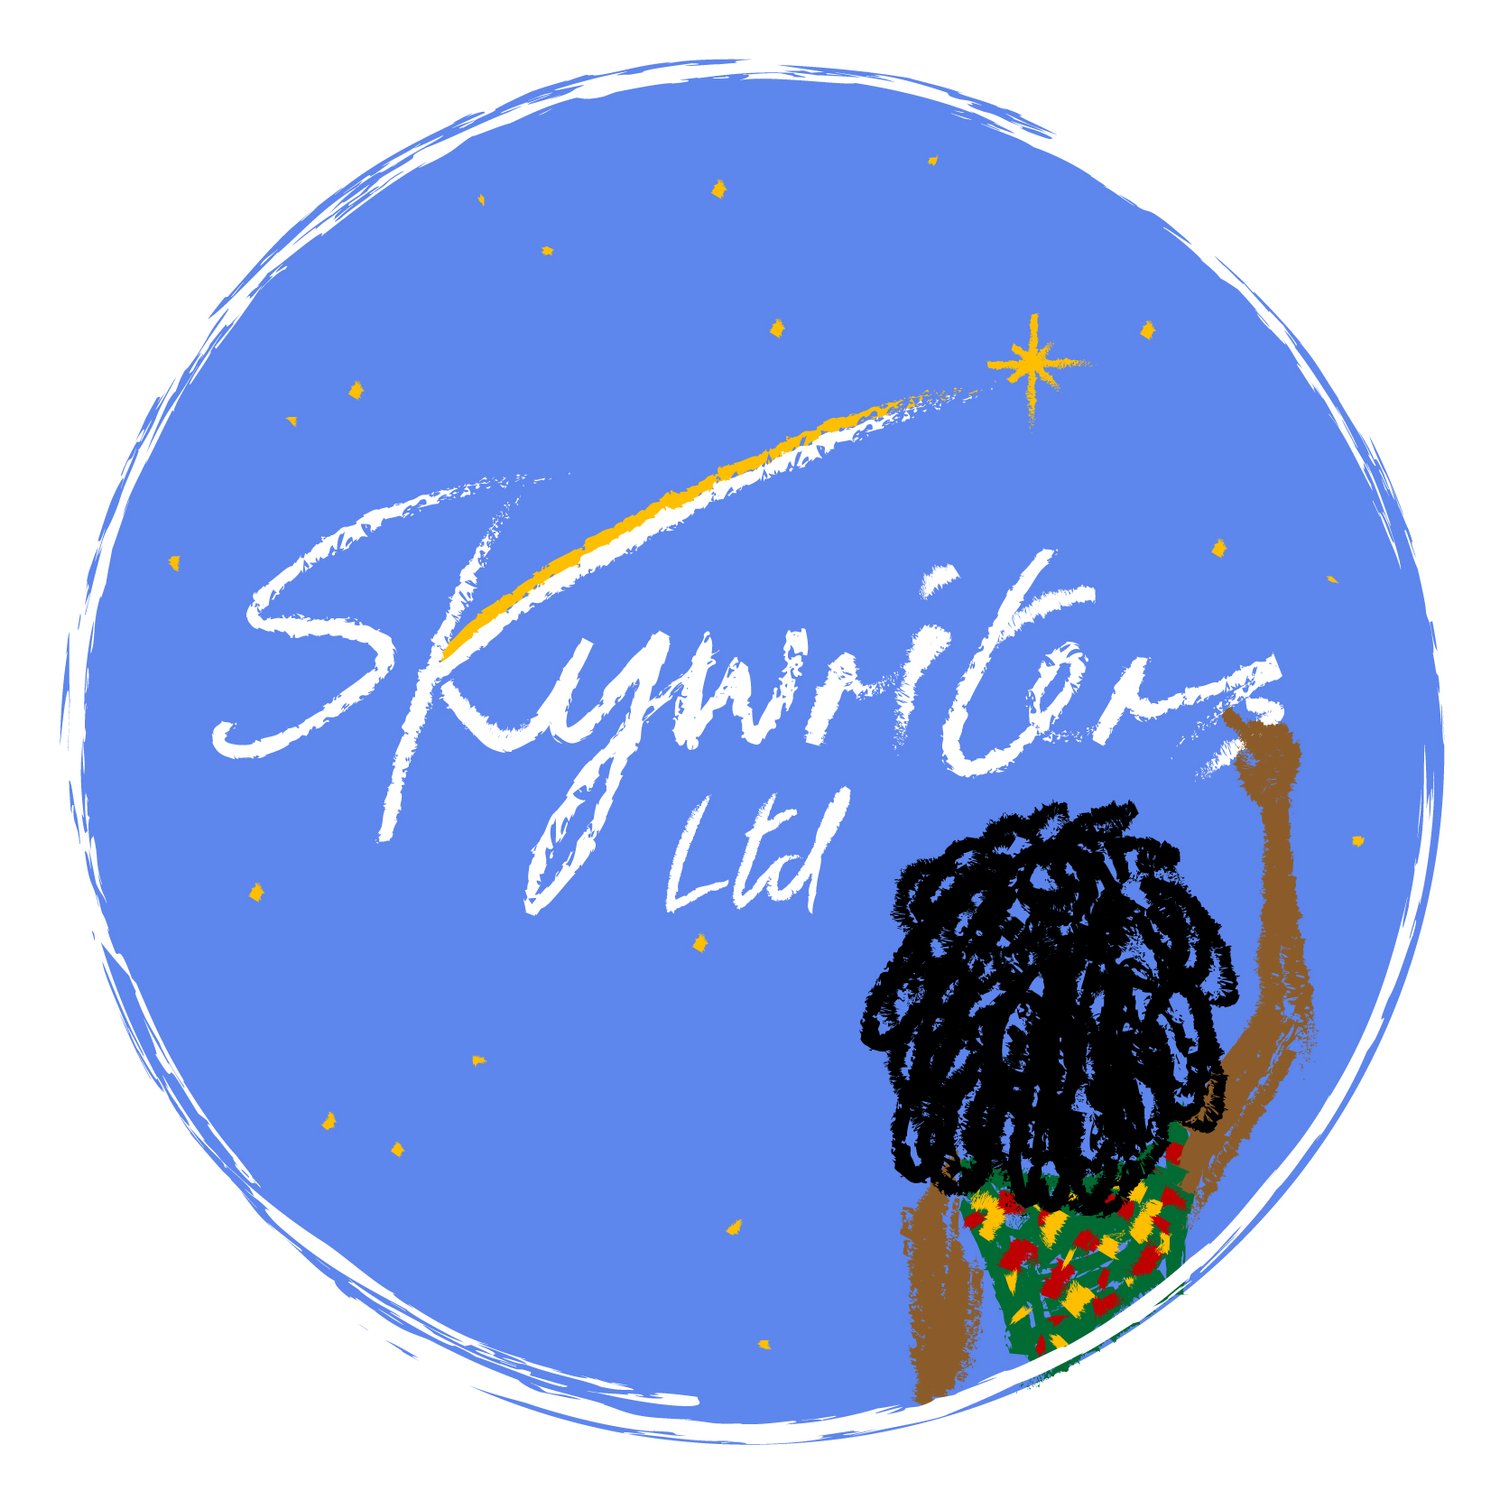 Skywriters Ltd